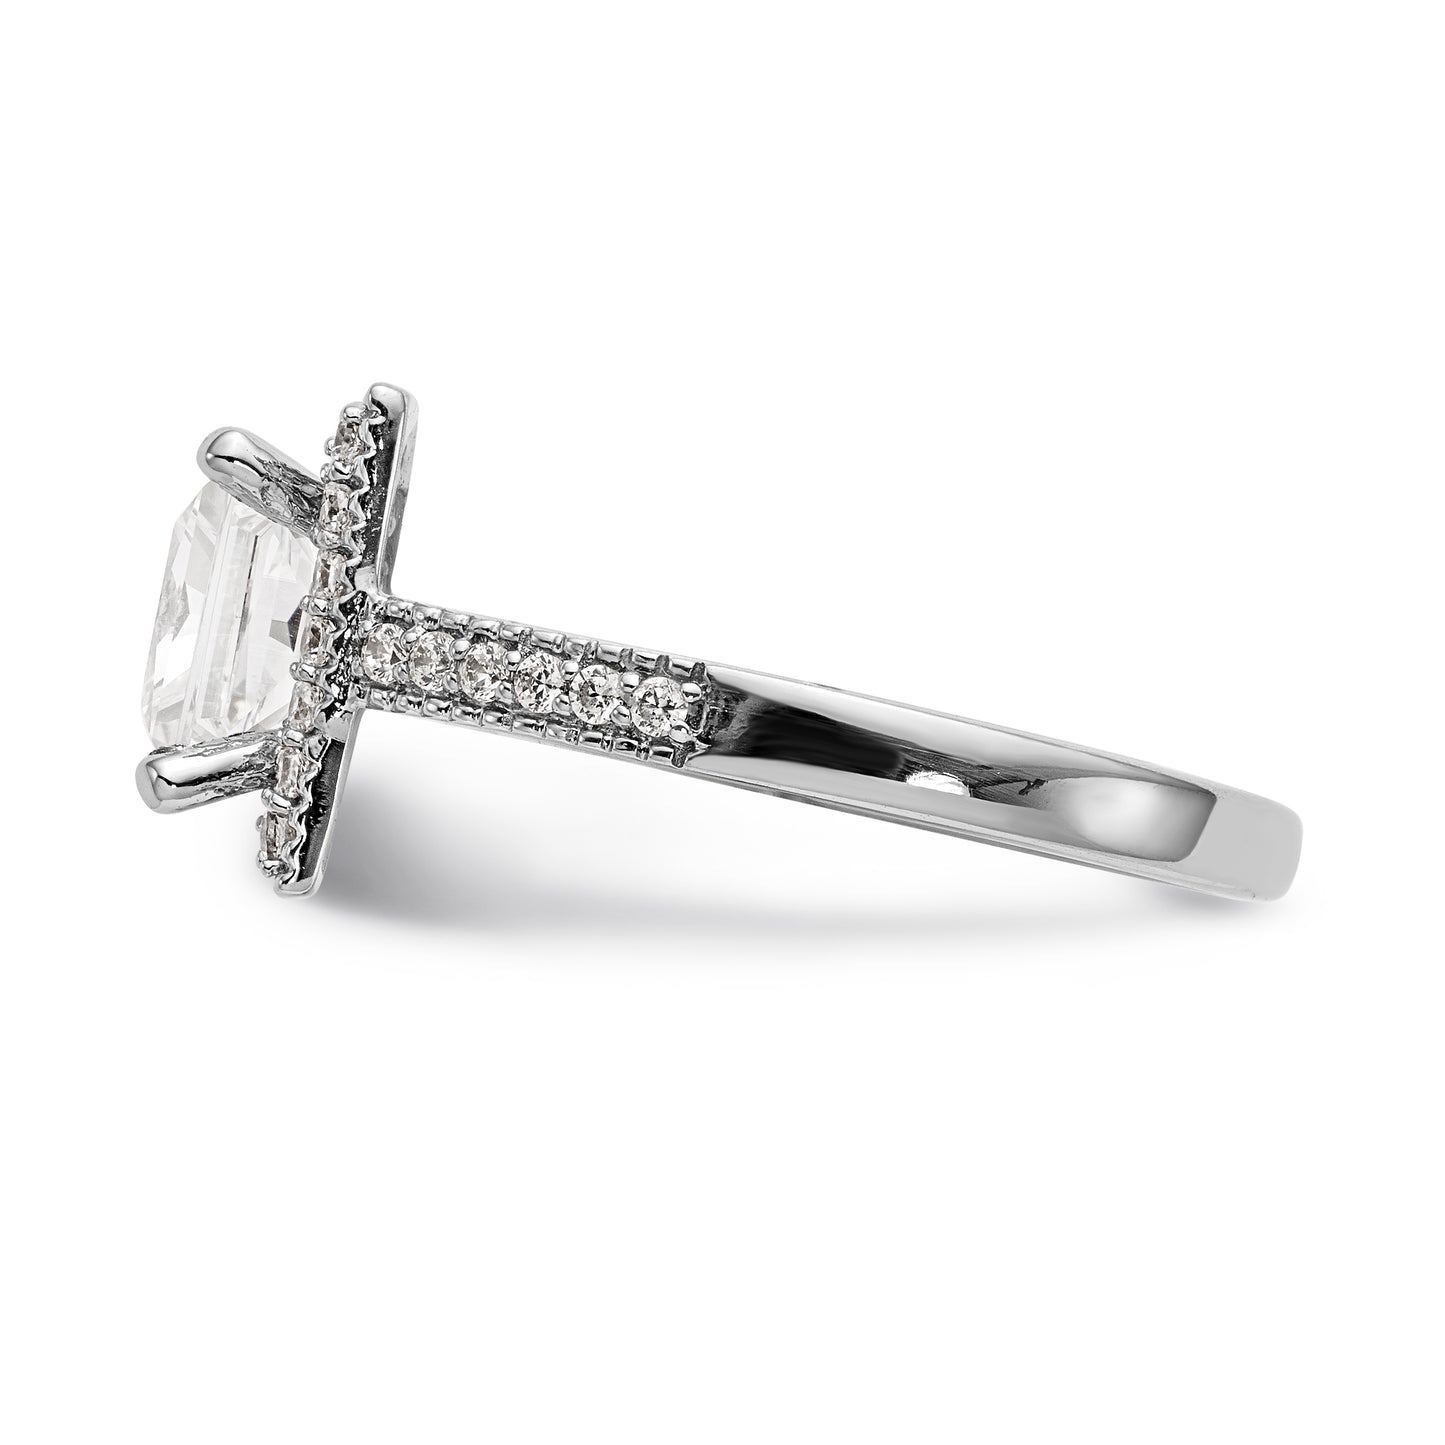 14K White Gold Diamond Princess CZ Square Halo Engagement Ring